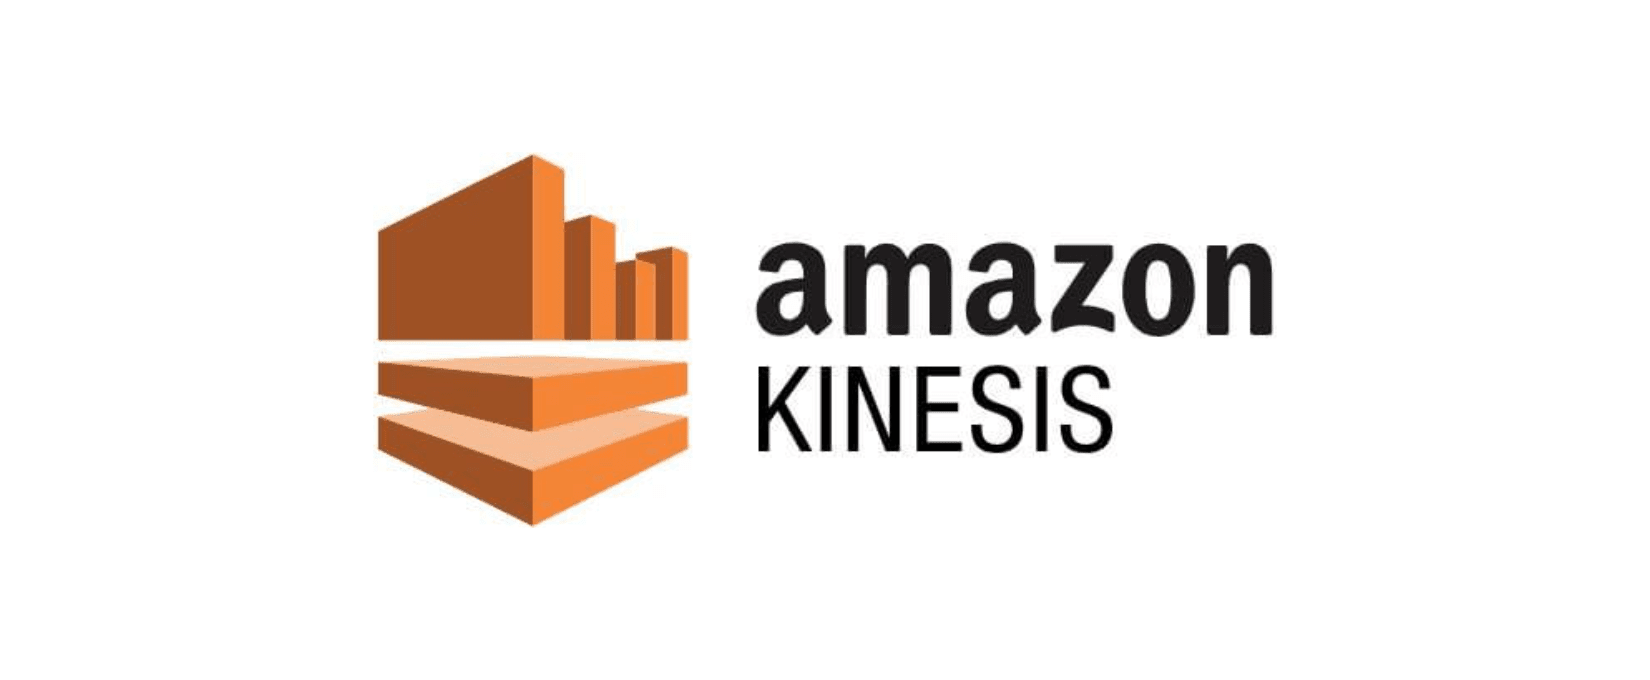 Endpoint Service: Amazon Kinesis